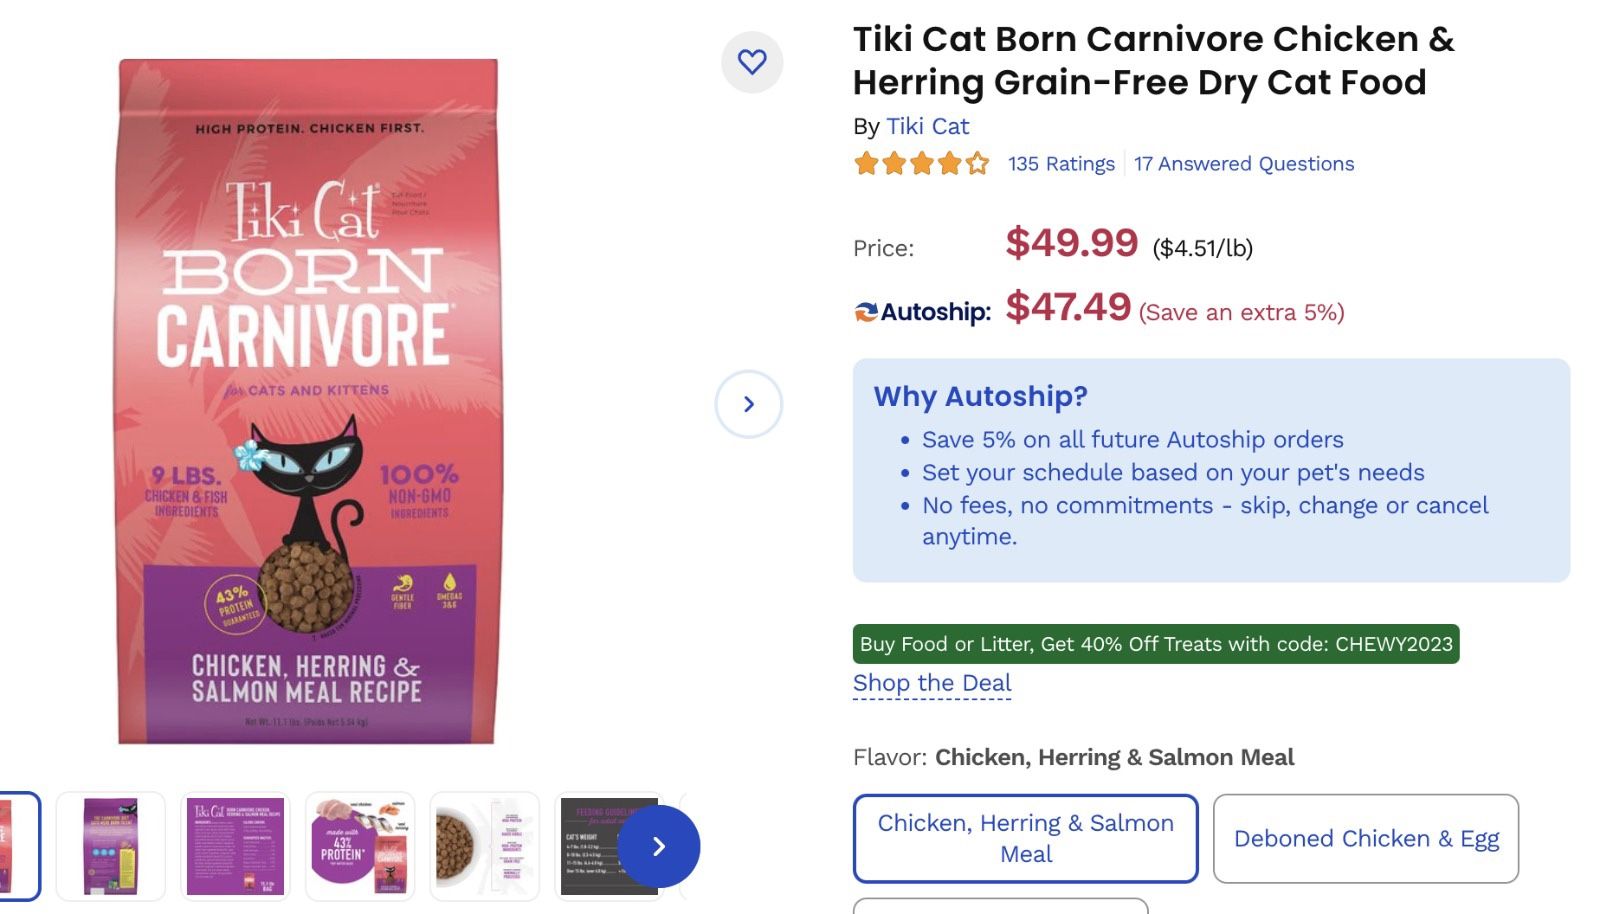 Tiki Cat Born Carnivore Chicken & Herring Grain-Free Dry Cat Food (11.1lbs)